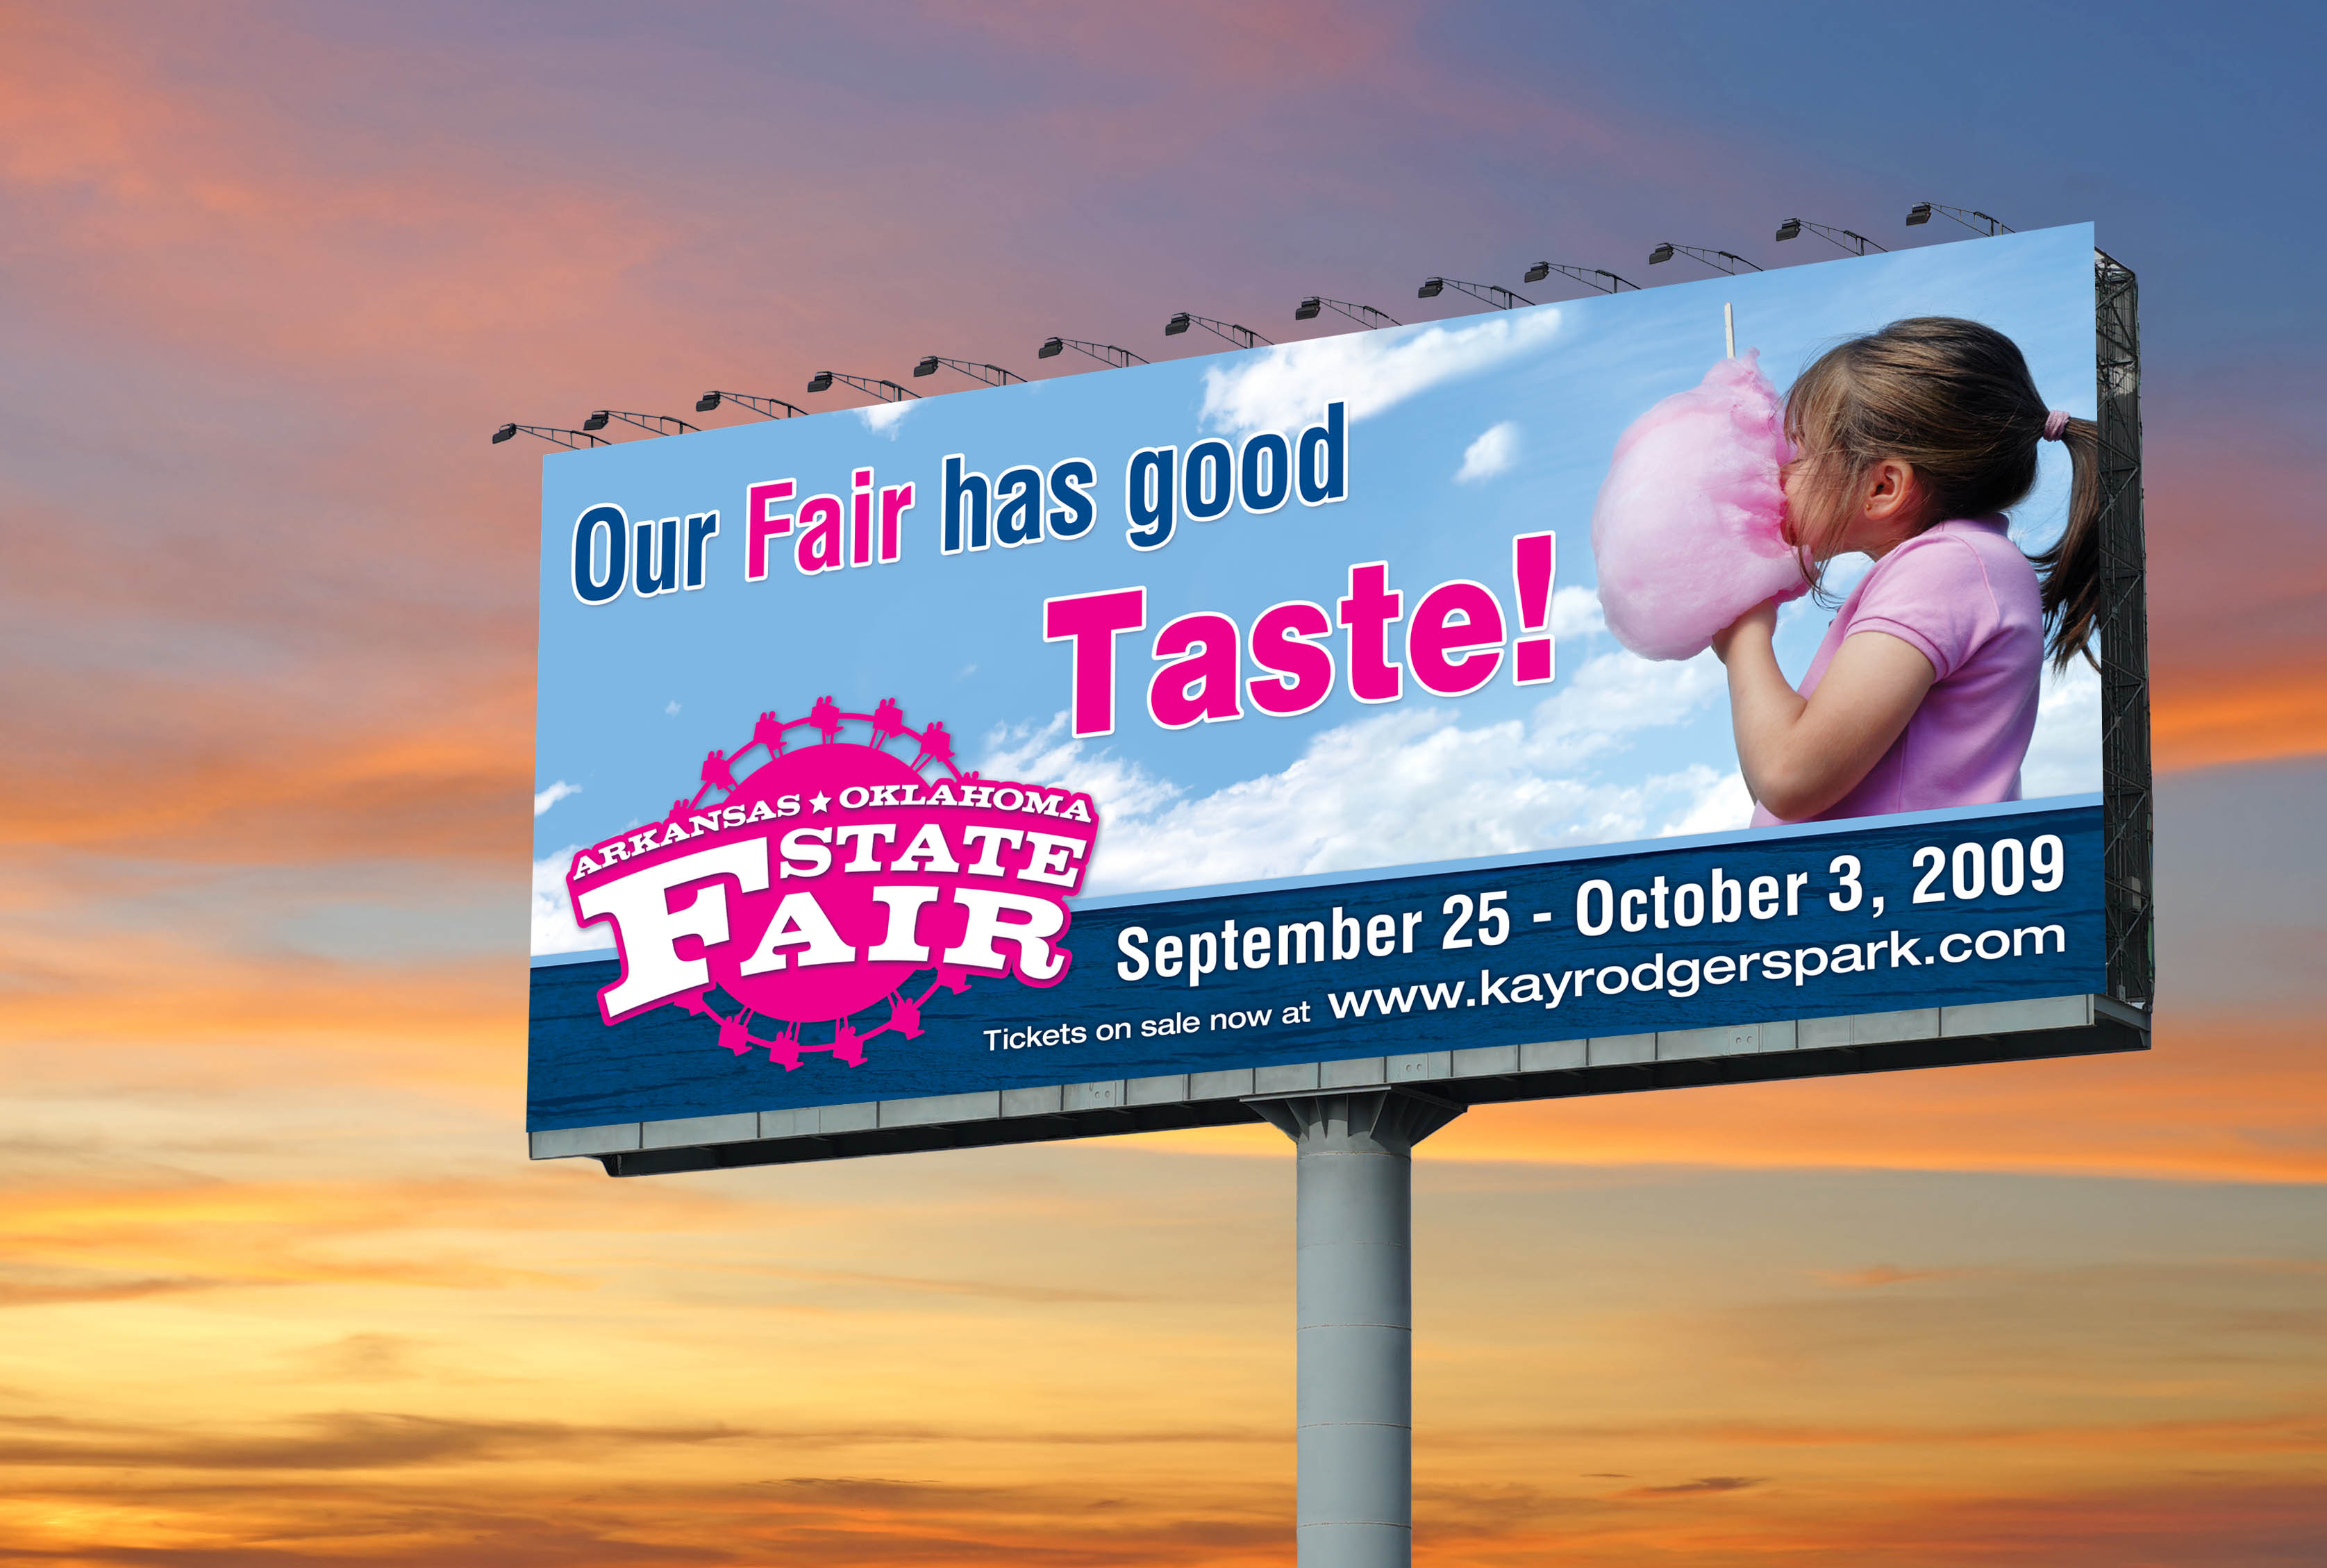 Rightmind Advertising Arkansas Oklahoma State Fair